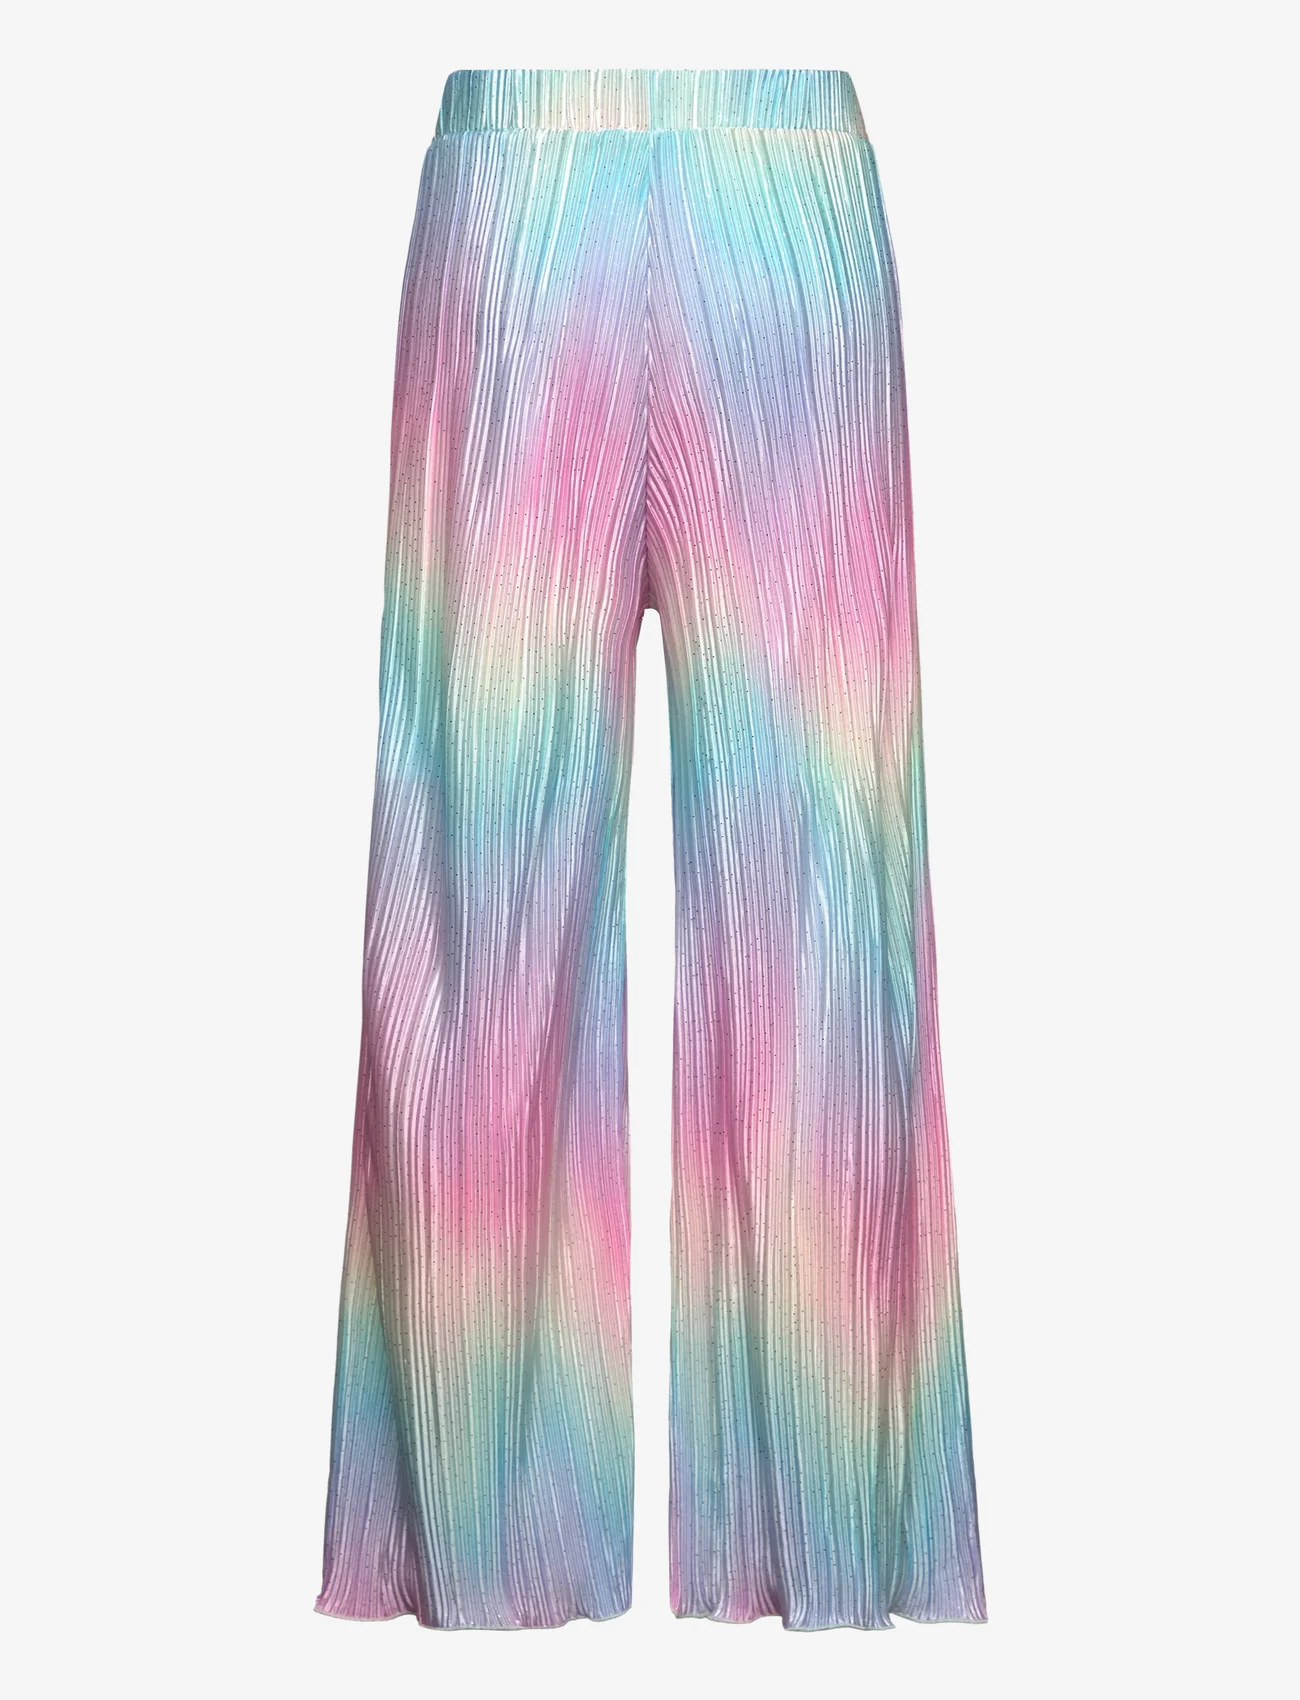 Lindex - Trouser jersey plisse rainbow - lowest prices - light pink - 1